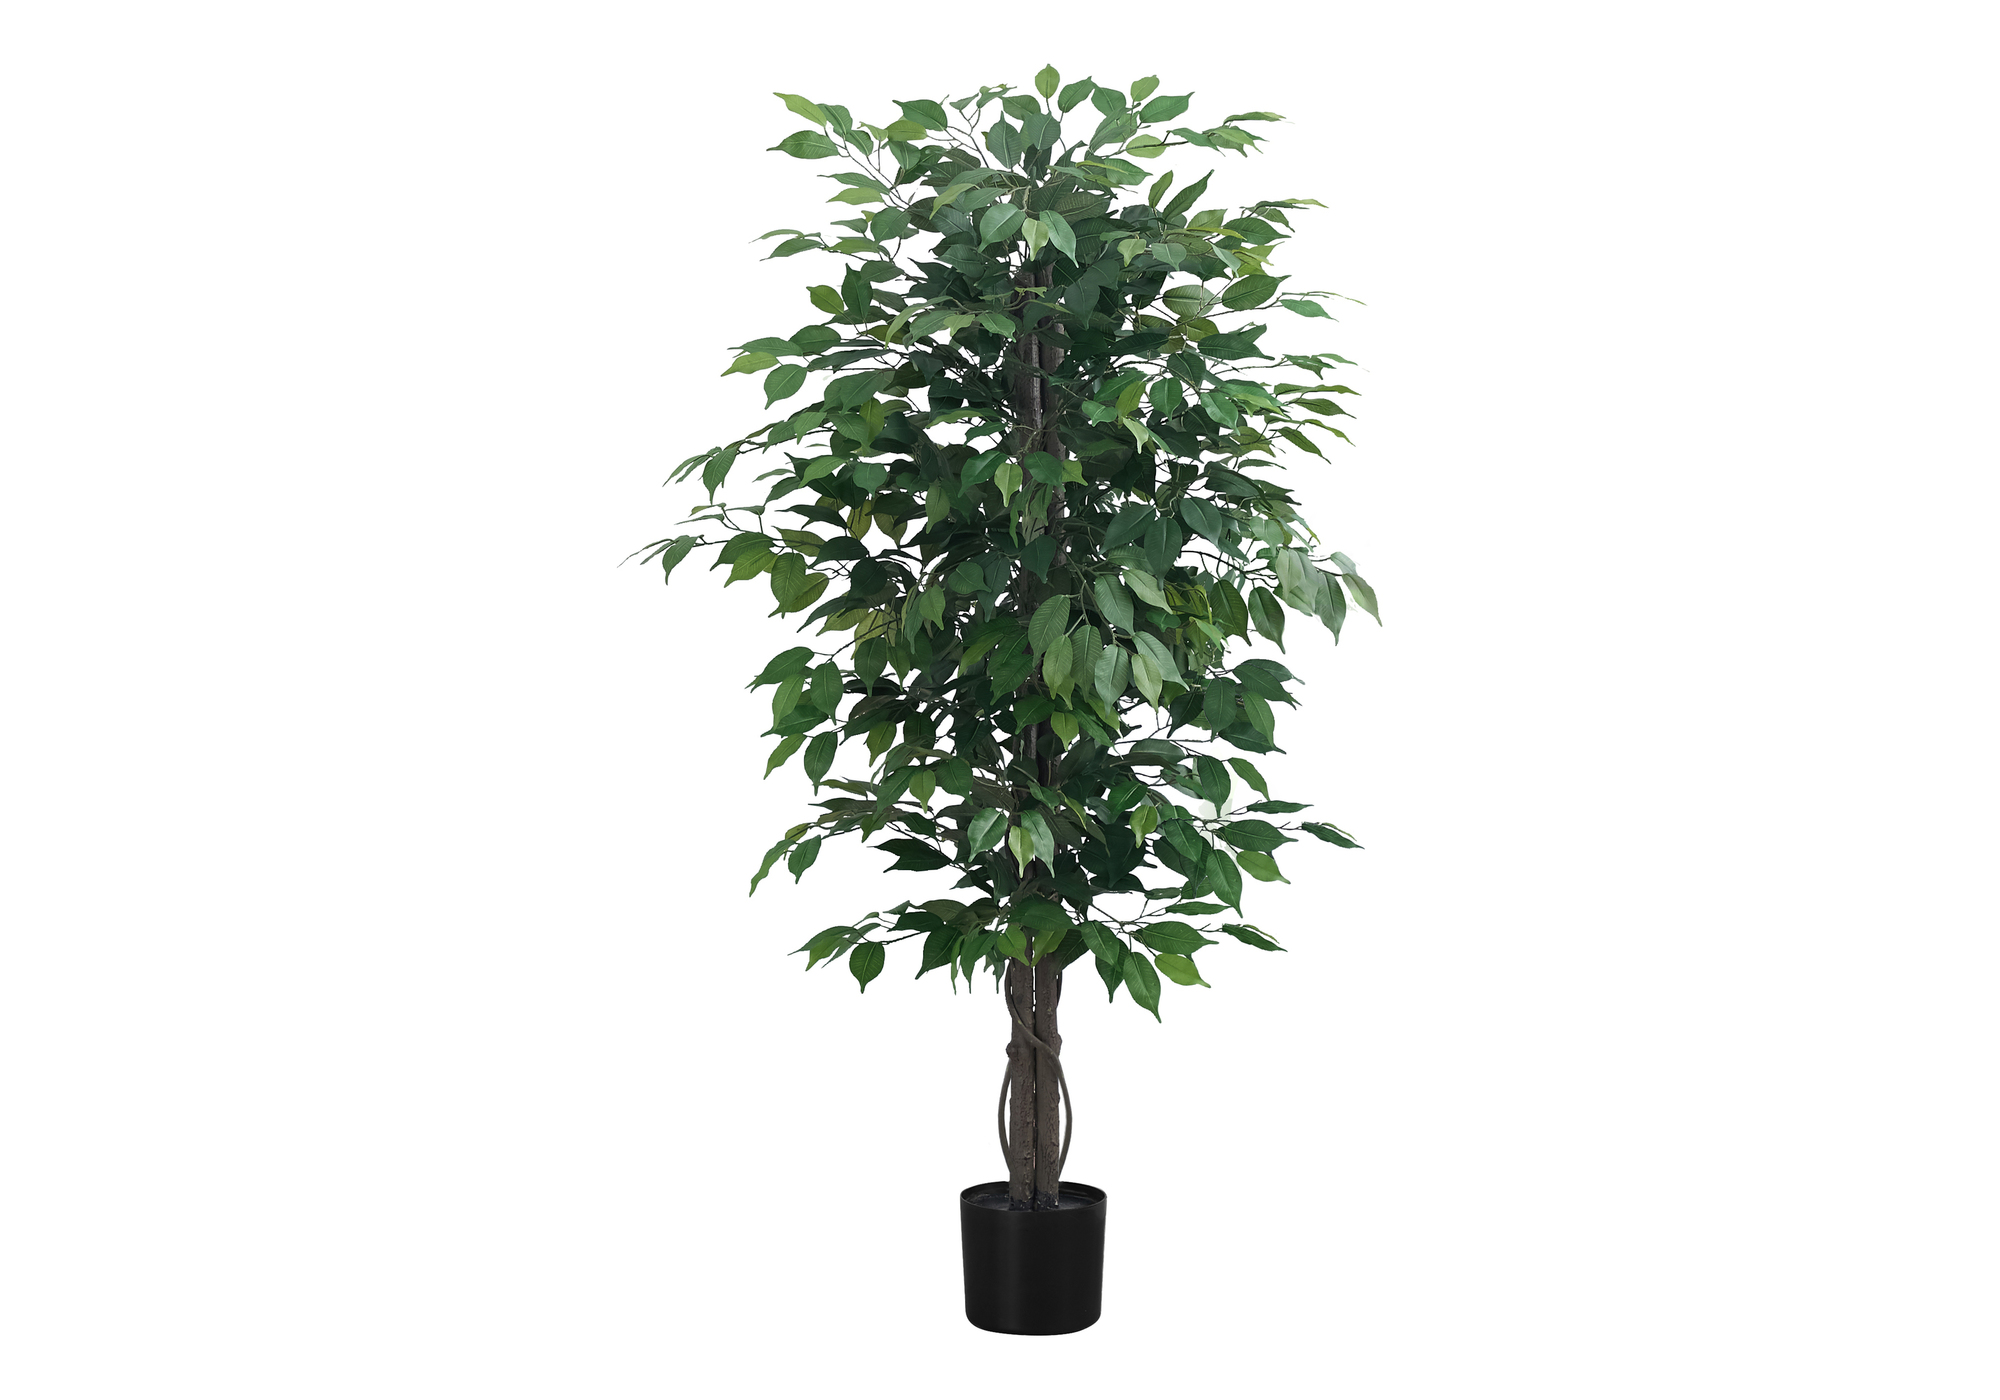 ARTIFICIAL PLANT - 58"H / INDOOR FICUS TREE IN A 6" POT